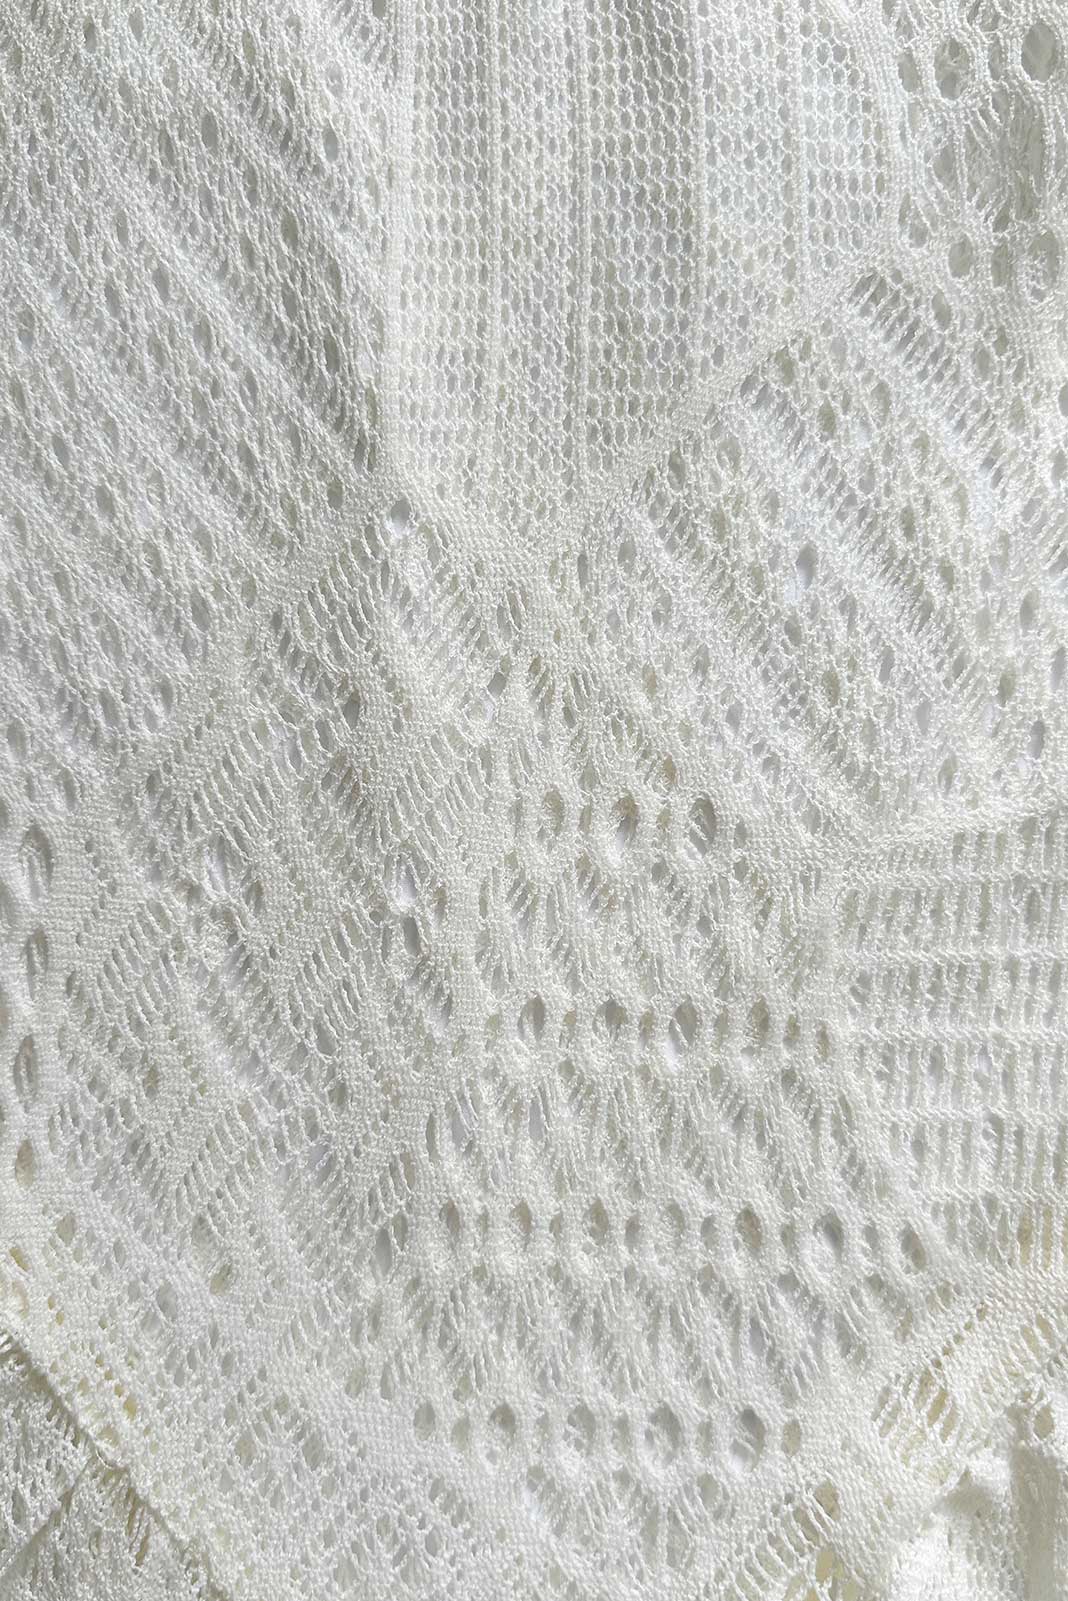 Yara Asymmetrical Skirt / Seashell Knit